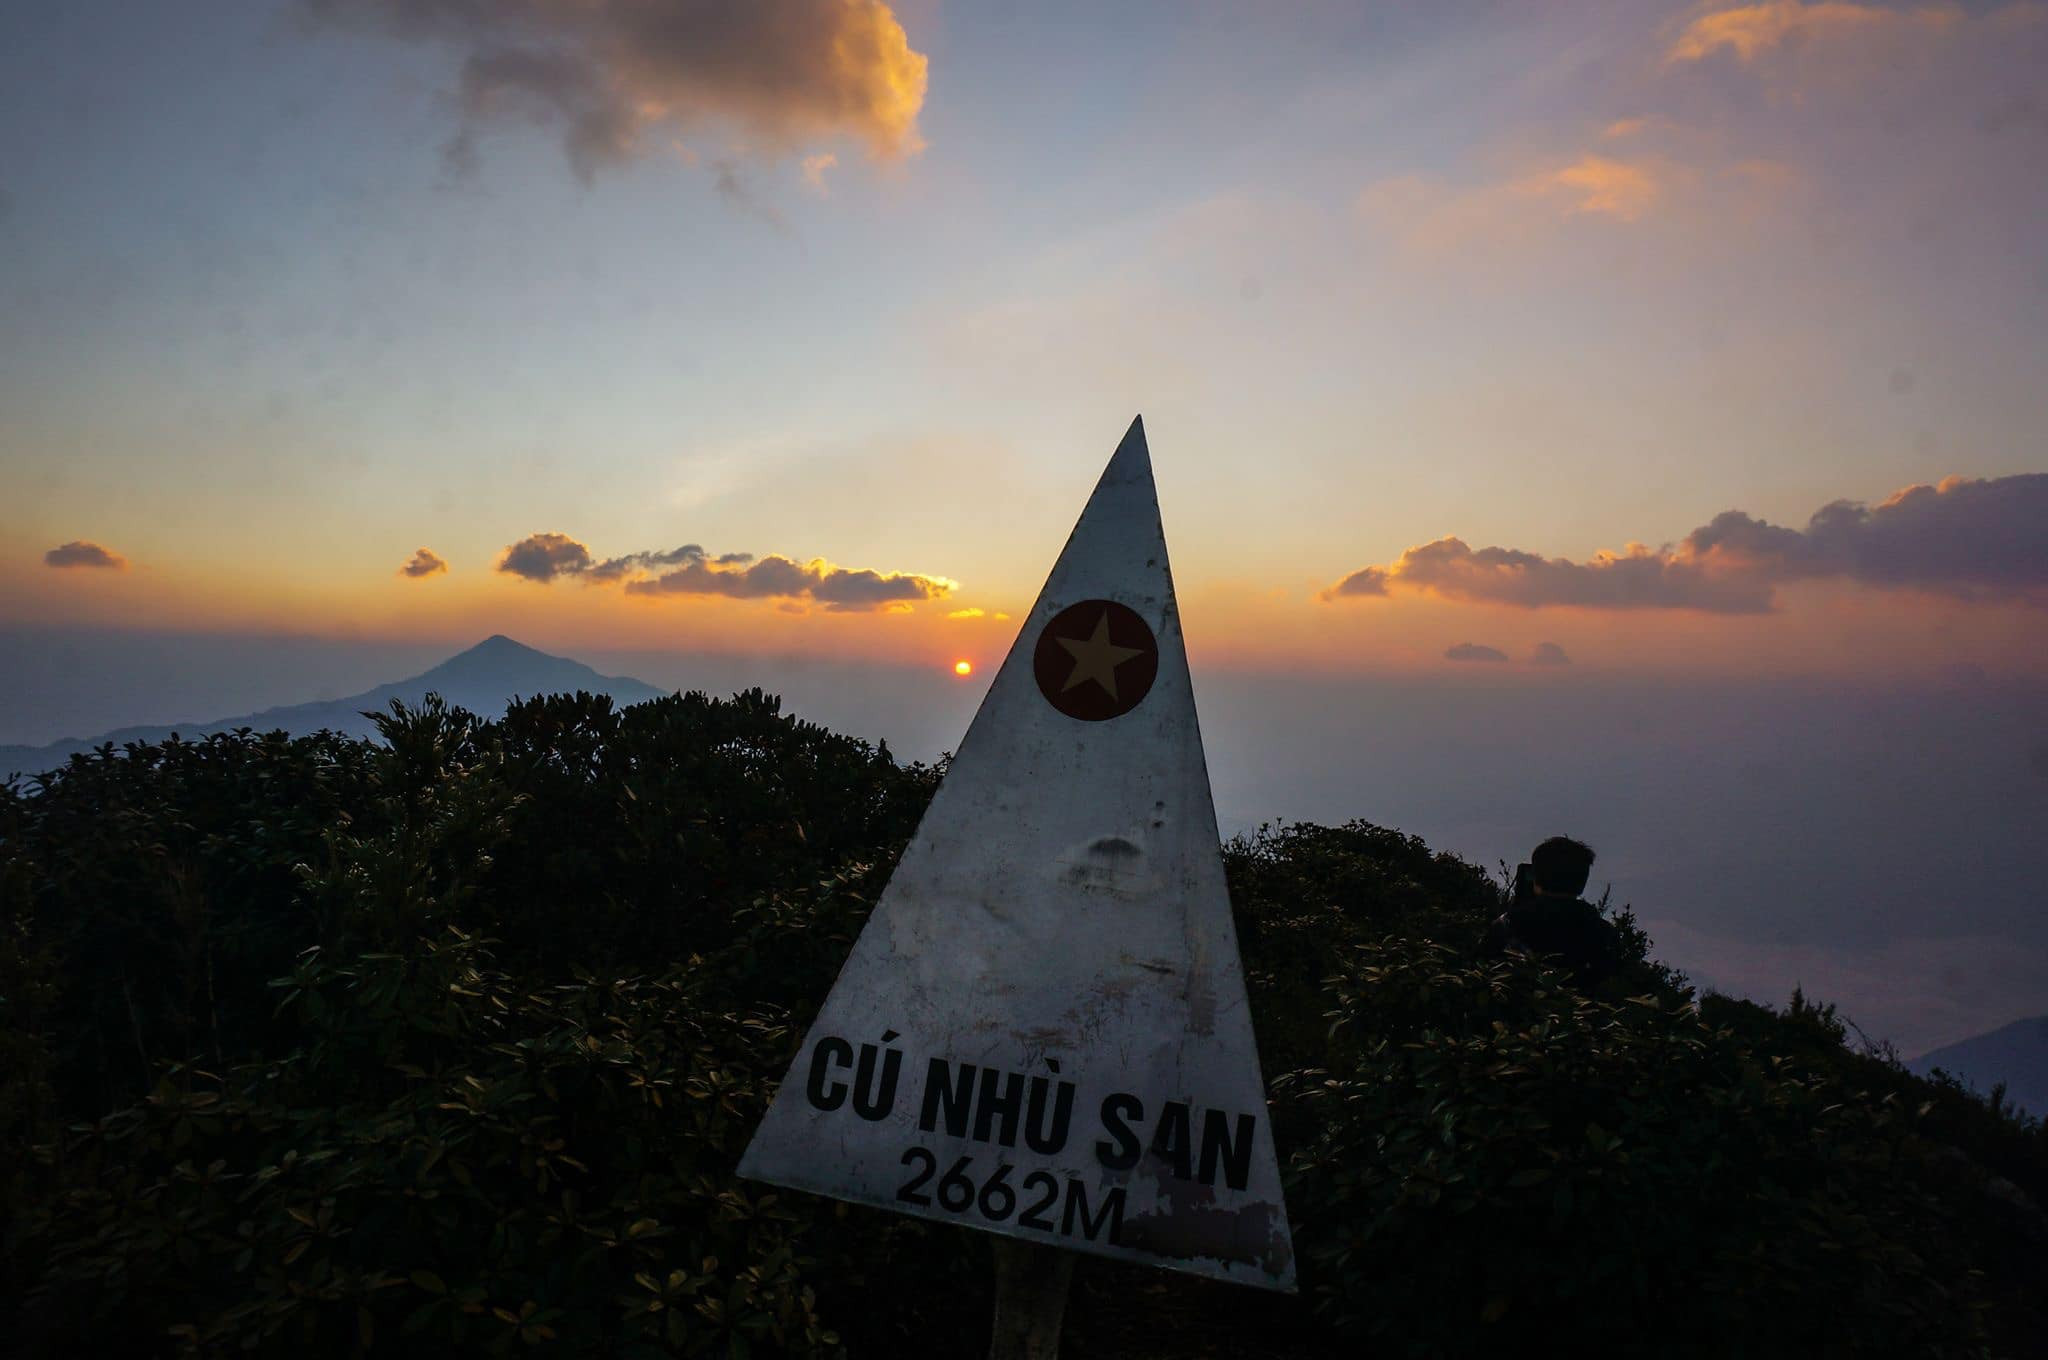 Canh Dep Trekking Cu Nhu San Ban Ngay (8)